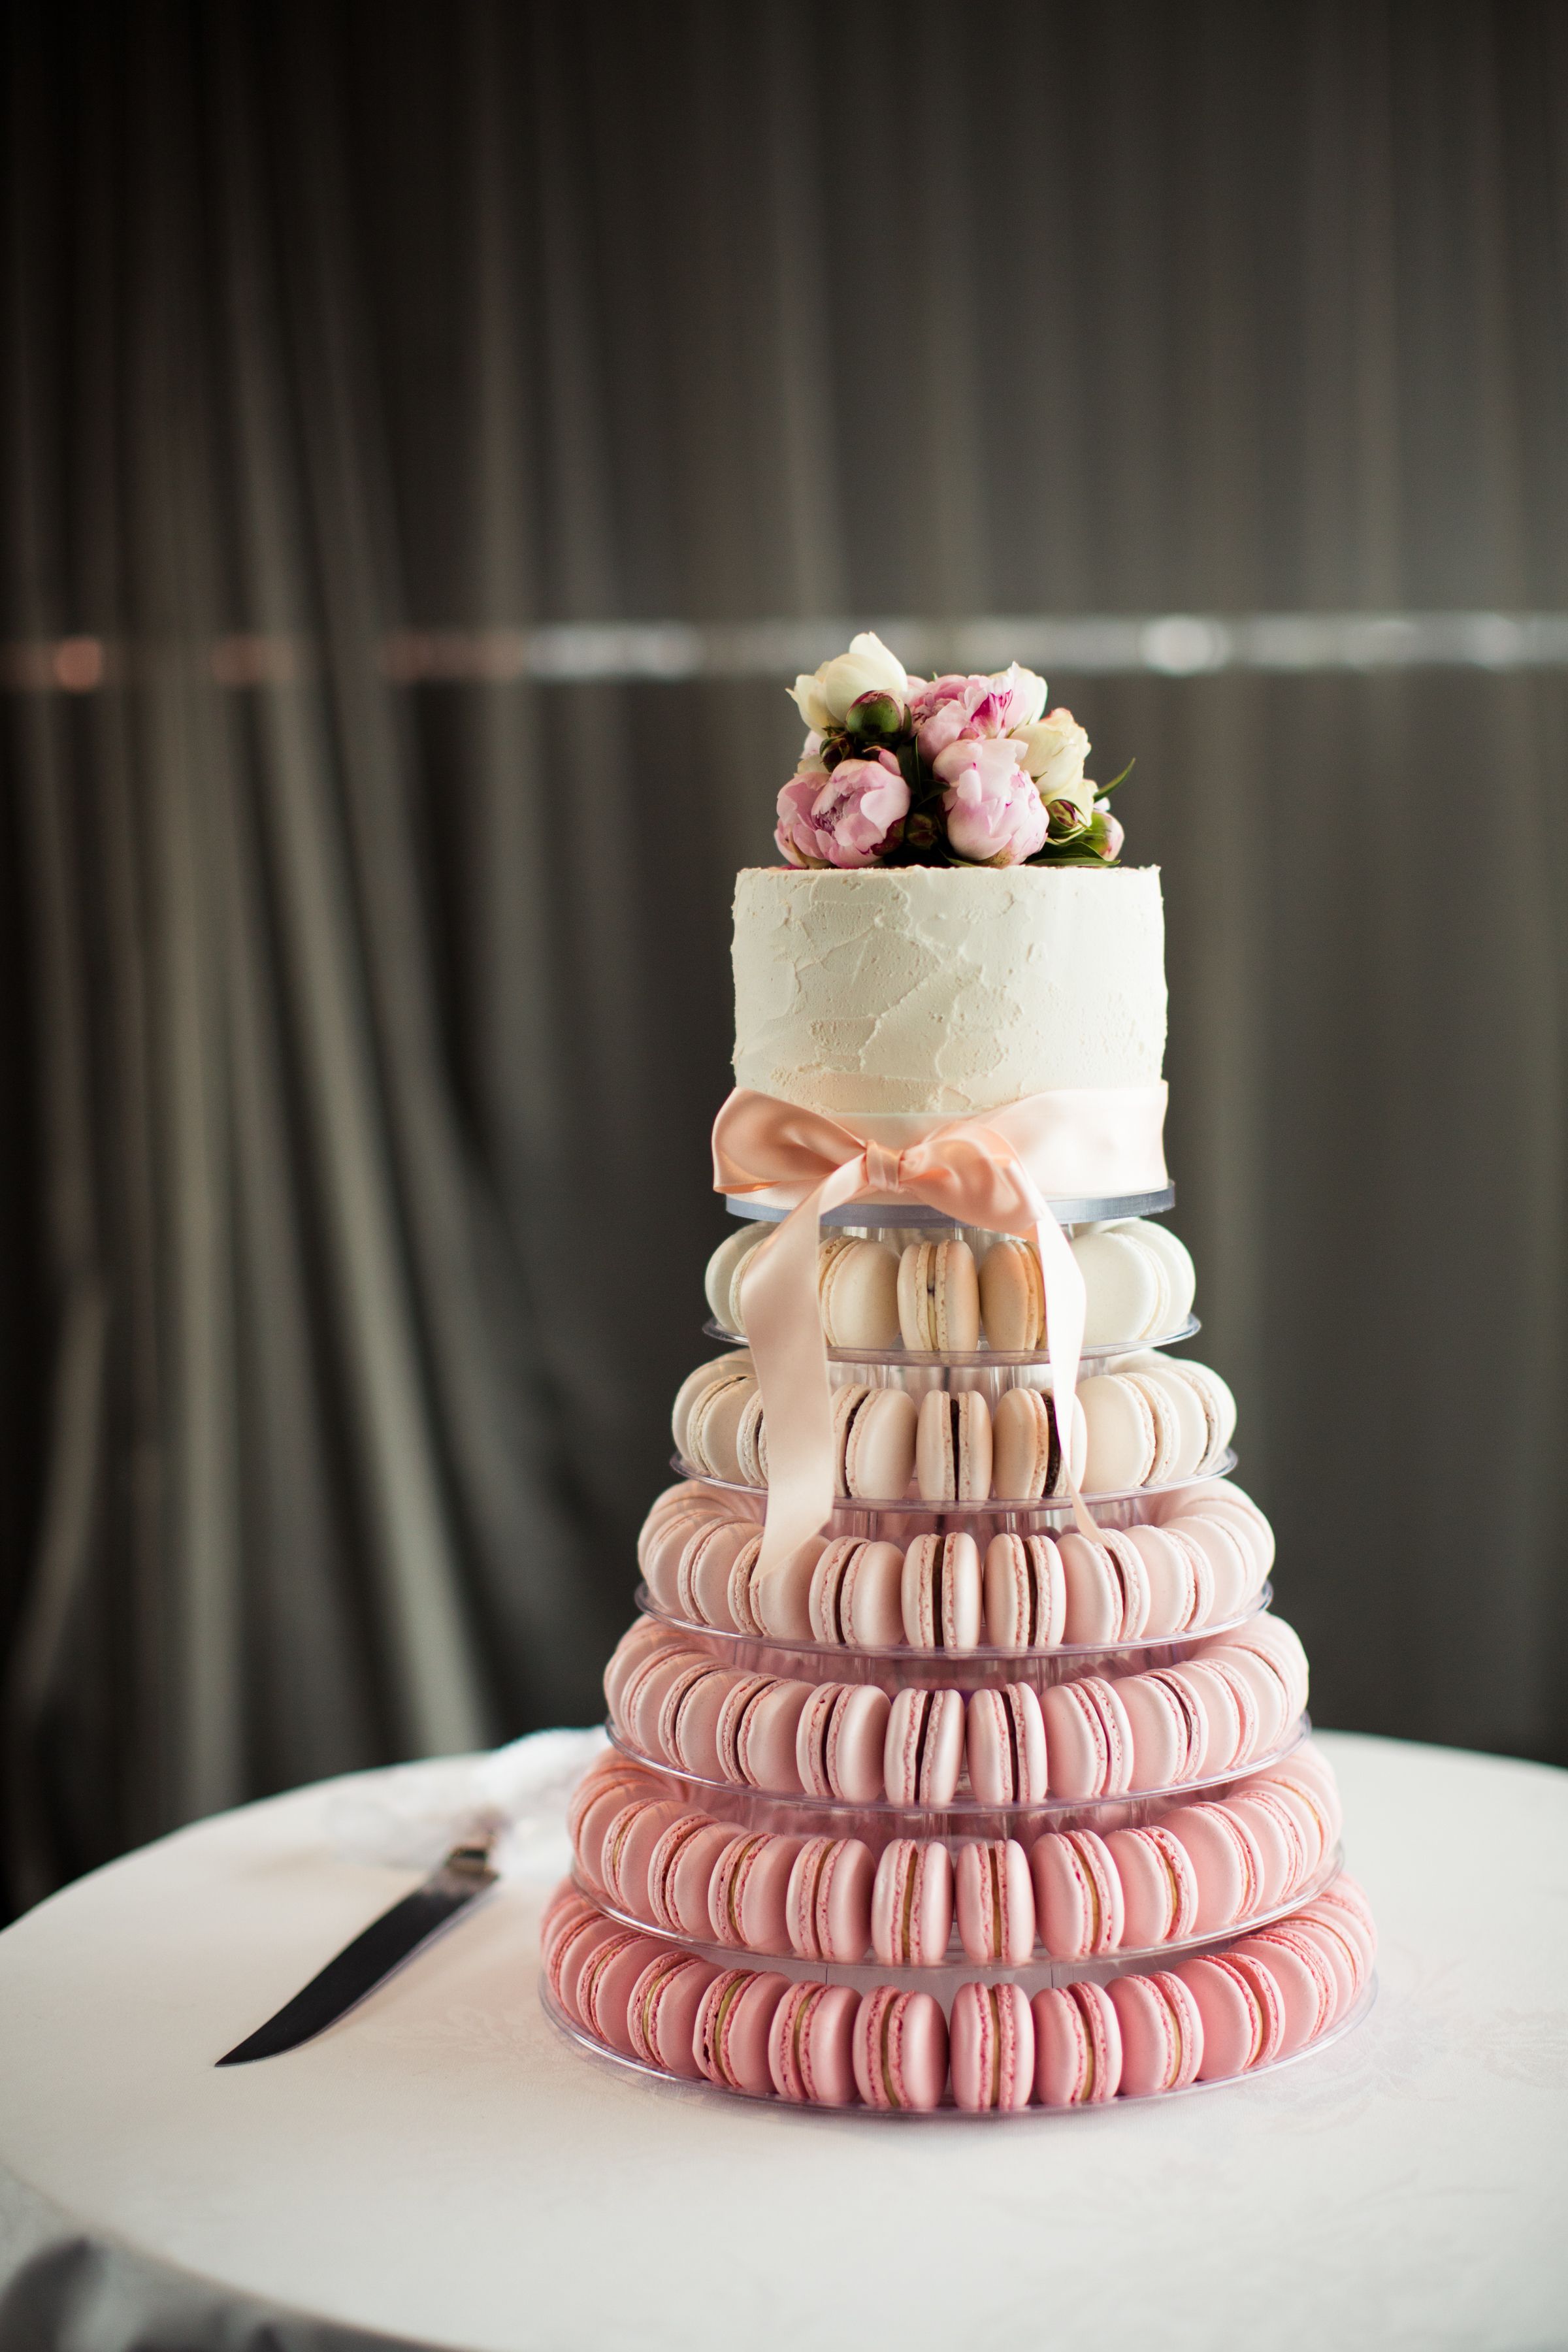 Wedding macaroon cake idea | Inspiring post by Bridestory.com ...